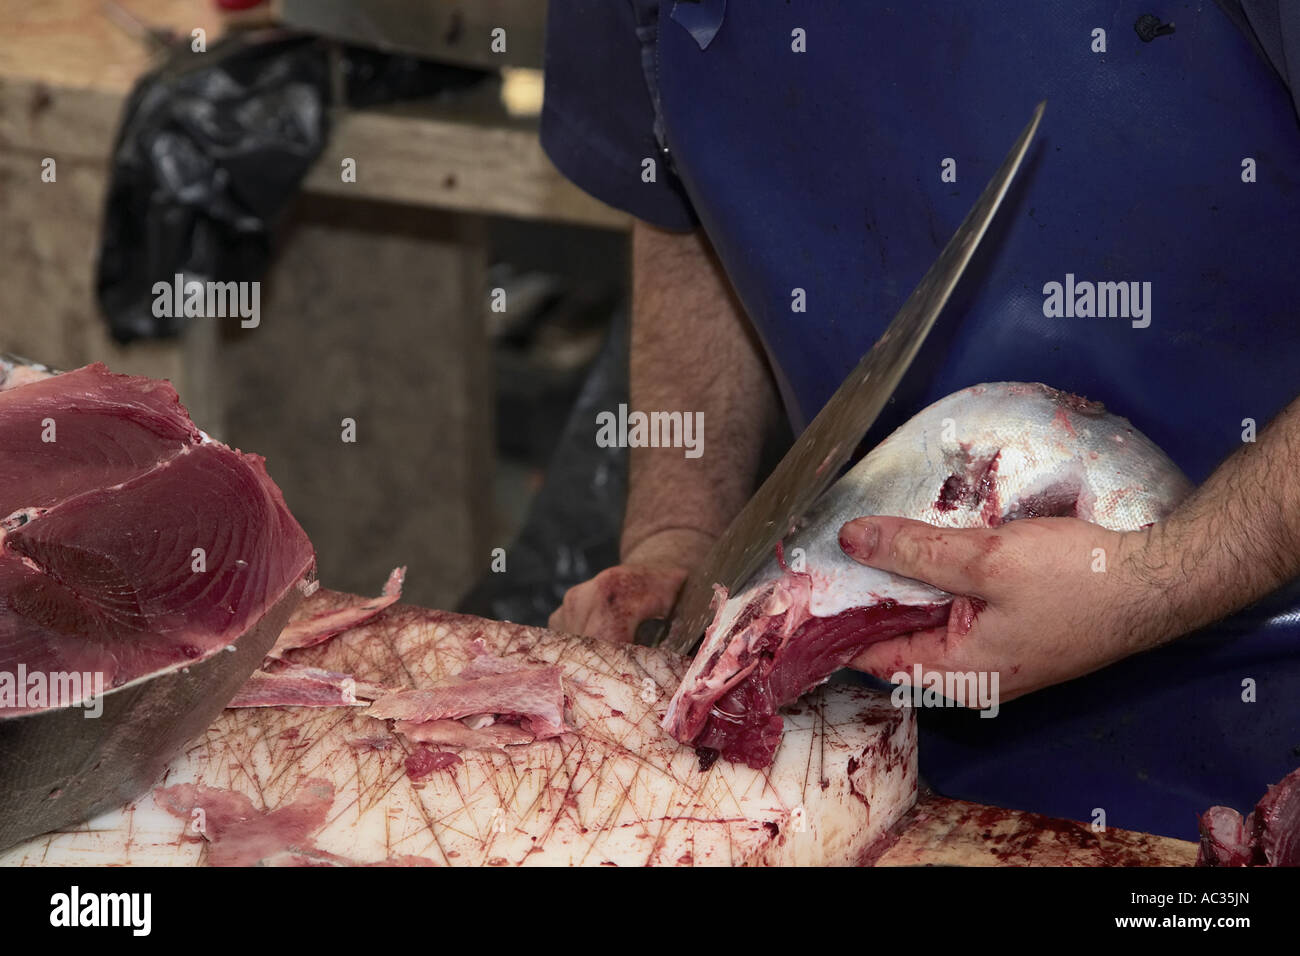 tunny, blue-fin tuna, blue-finned tuna, northern bluefin tuna (Thunnus thynnus), at the fish market, Portugal, Madeira, Funchal Stock Photo